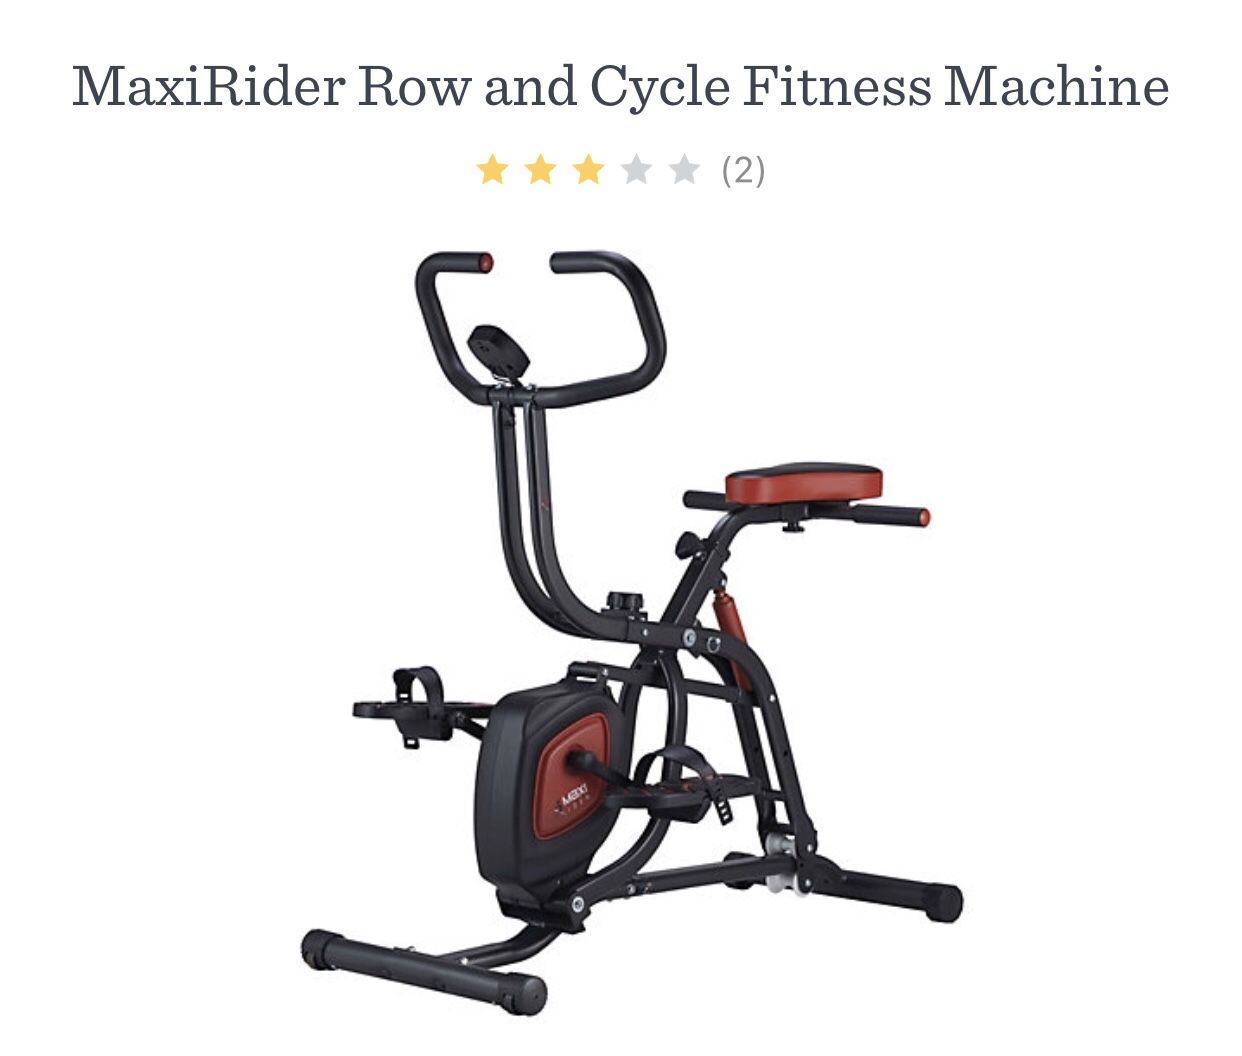 Max Rider Row and Cycle Fitness Machine Brand New!